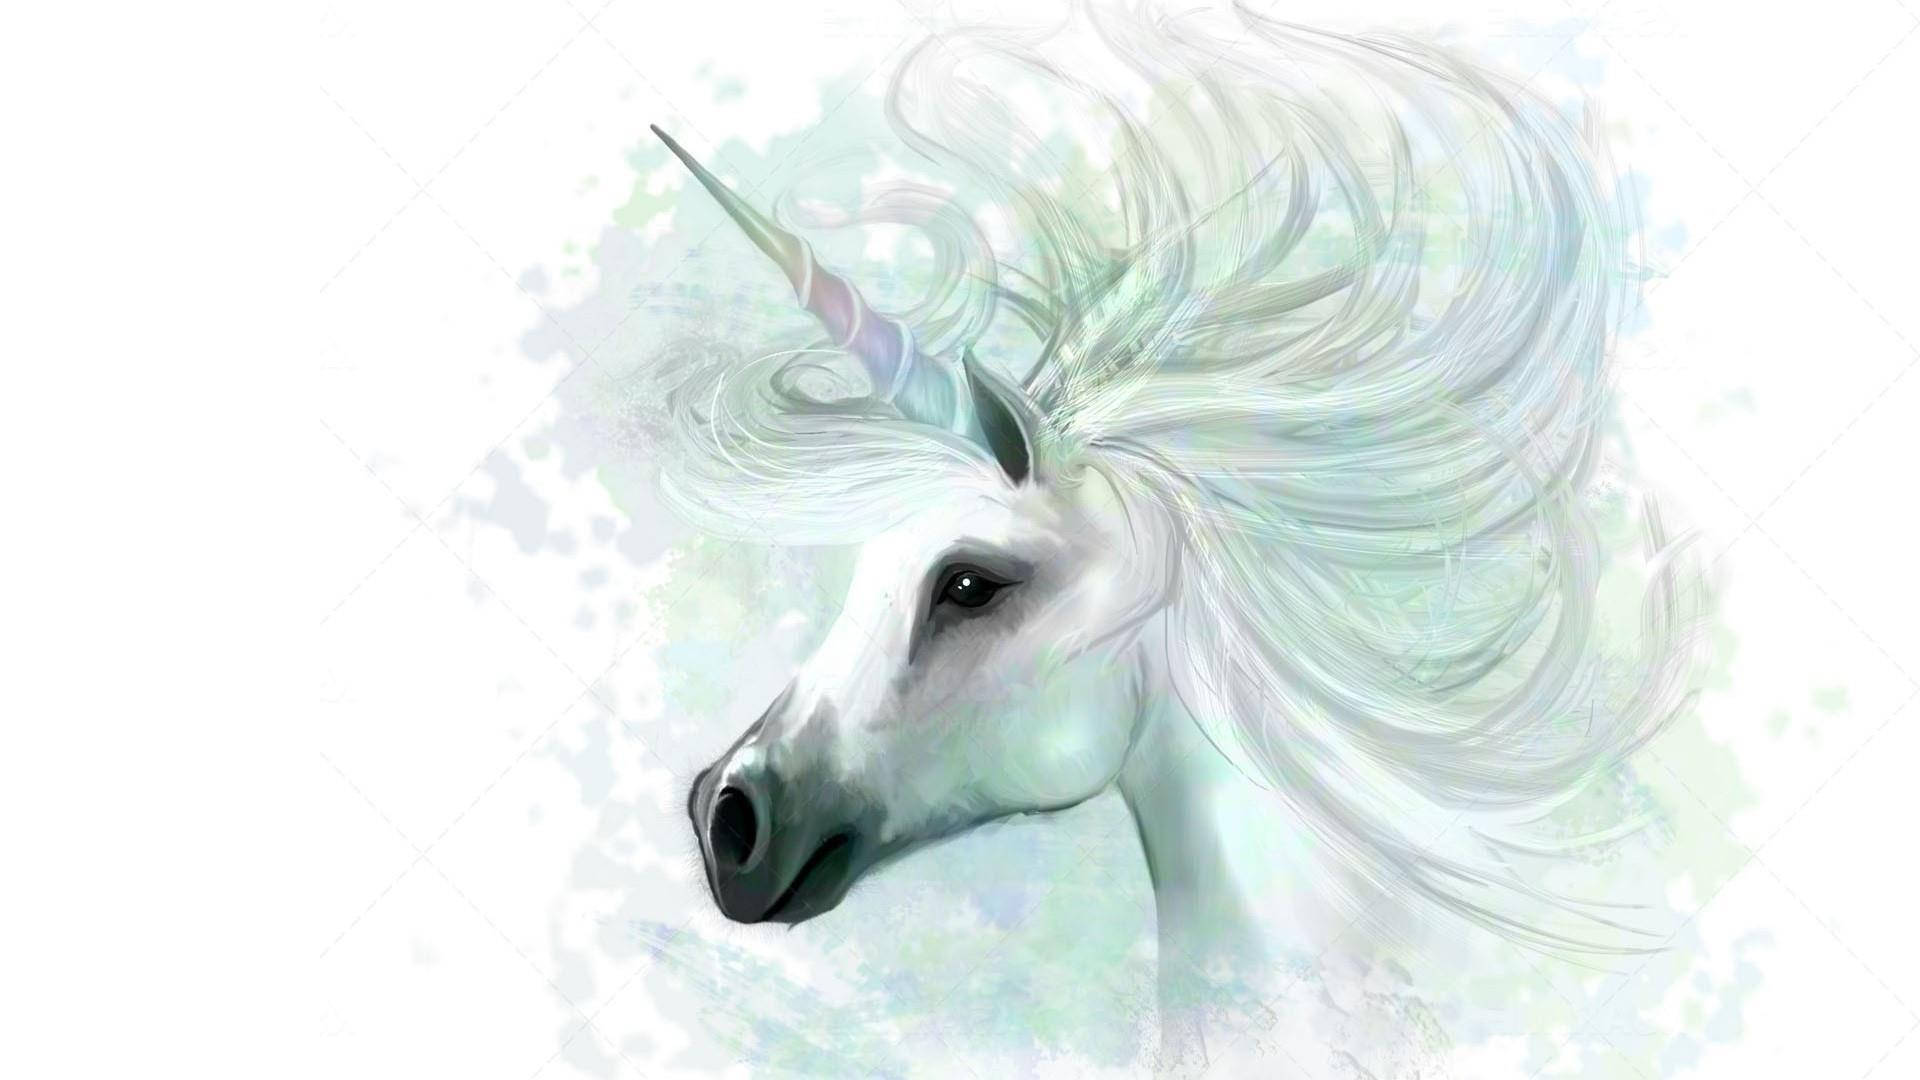 Free Unicorn Wallpaper Downloads, [200+] Unicorn Wallpapers for FREE |  